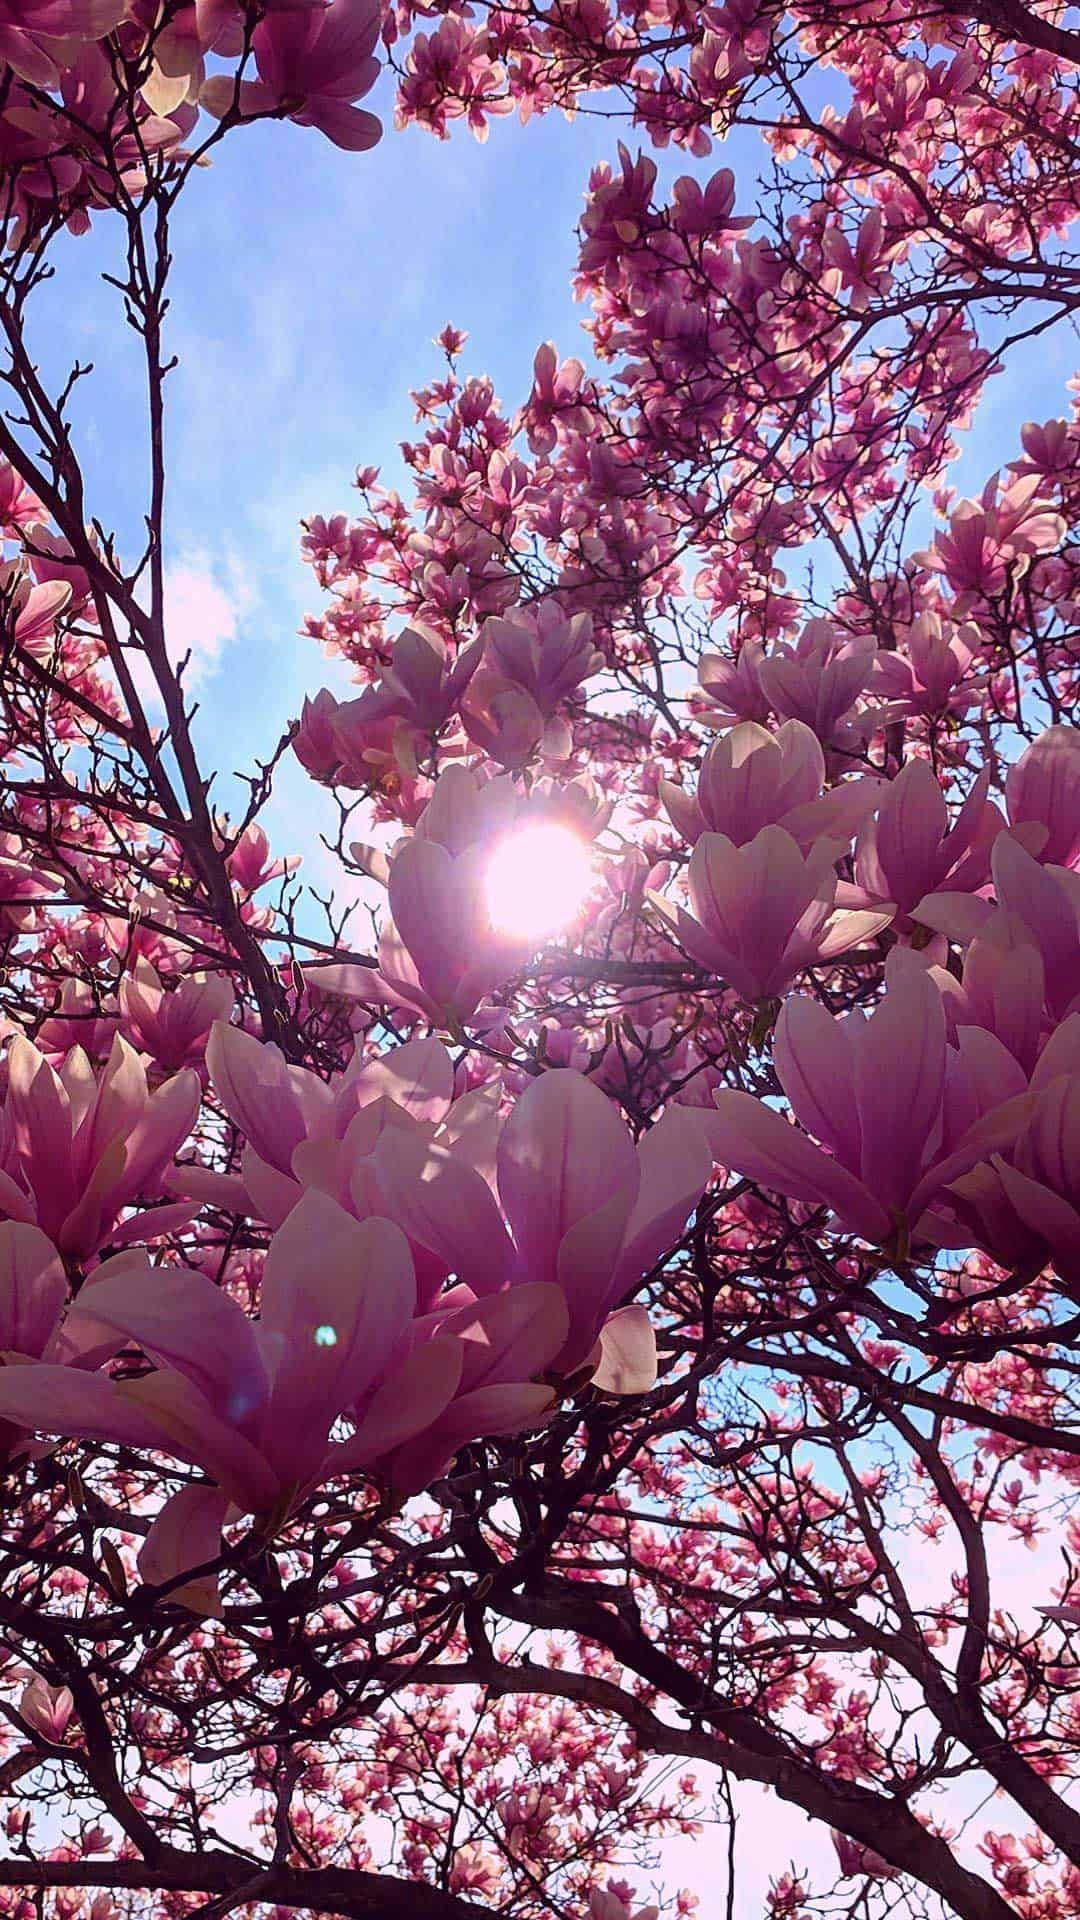 Magnolia Blossoms In The Spring Wallpaper